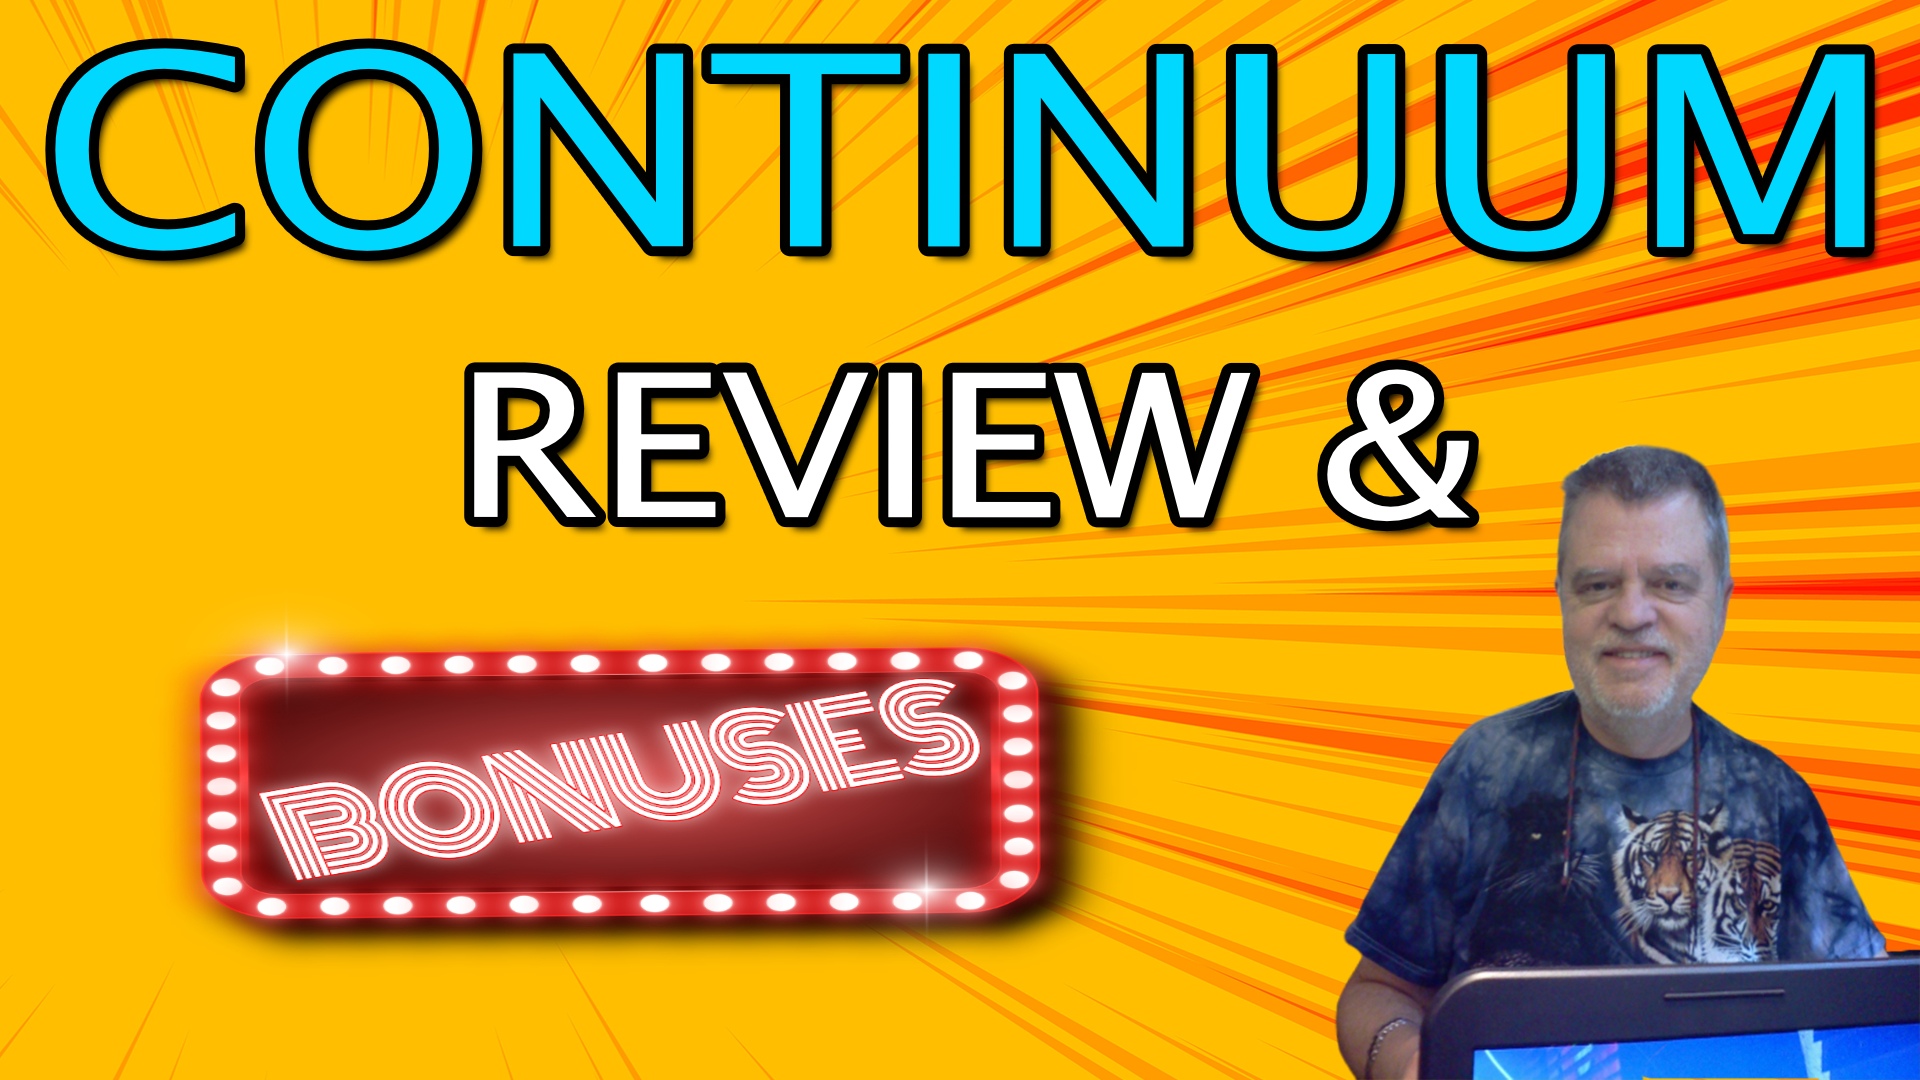 Continuum Review